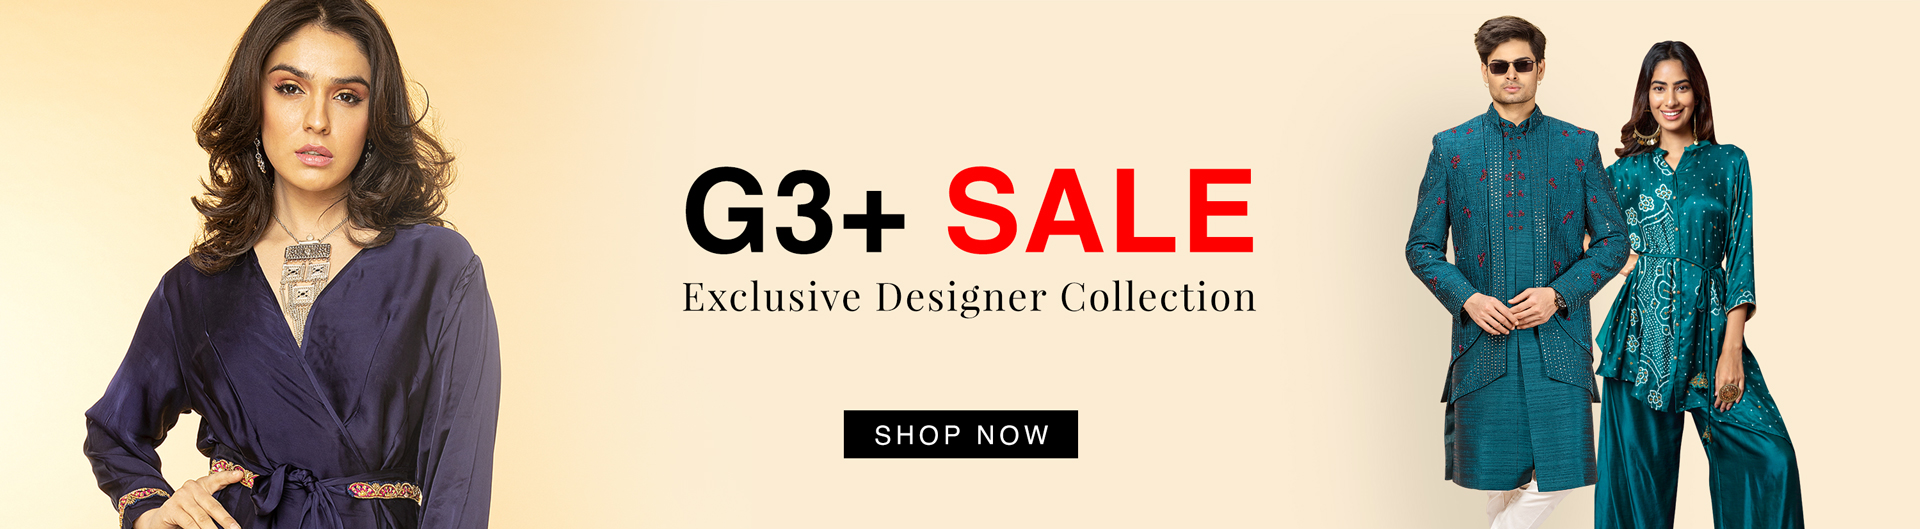 G3+ Fashion Sale